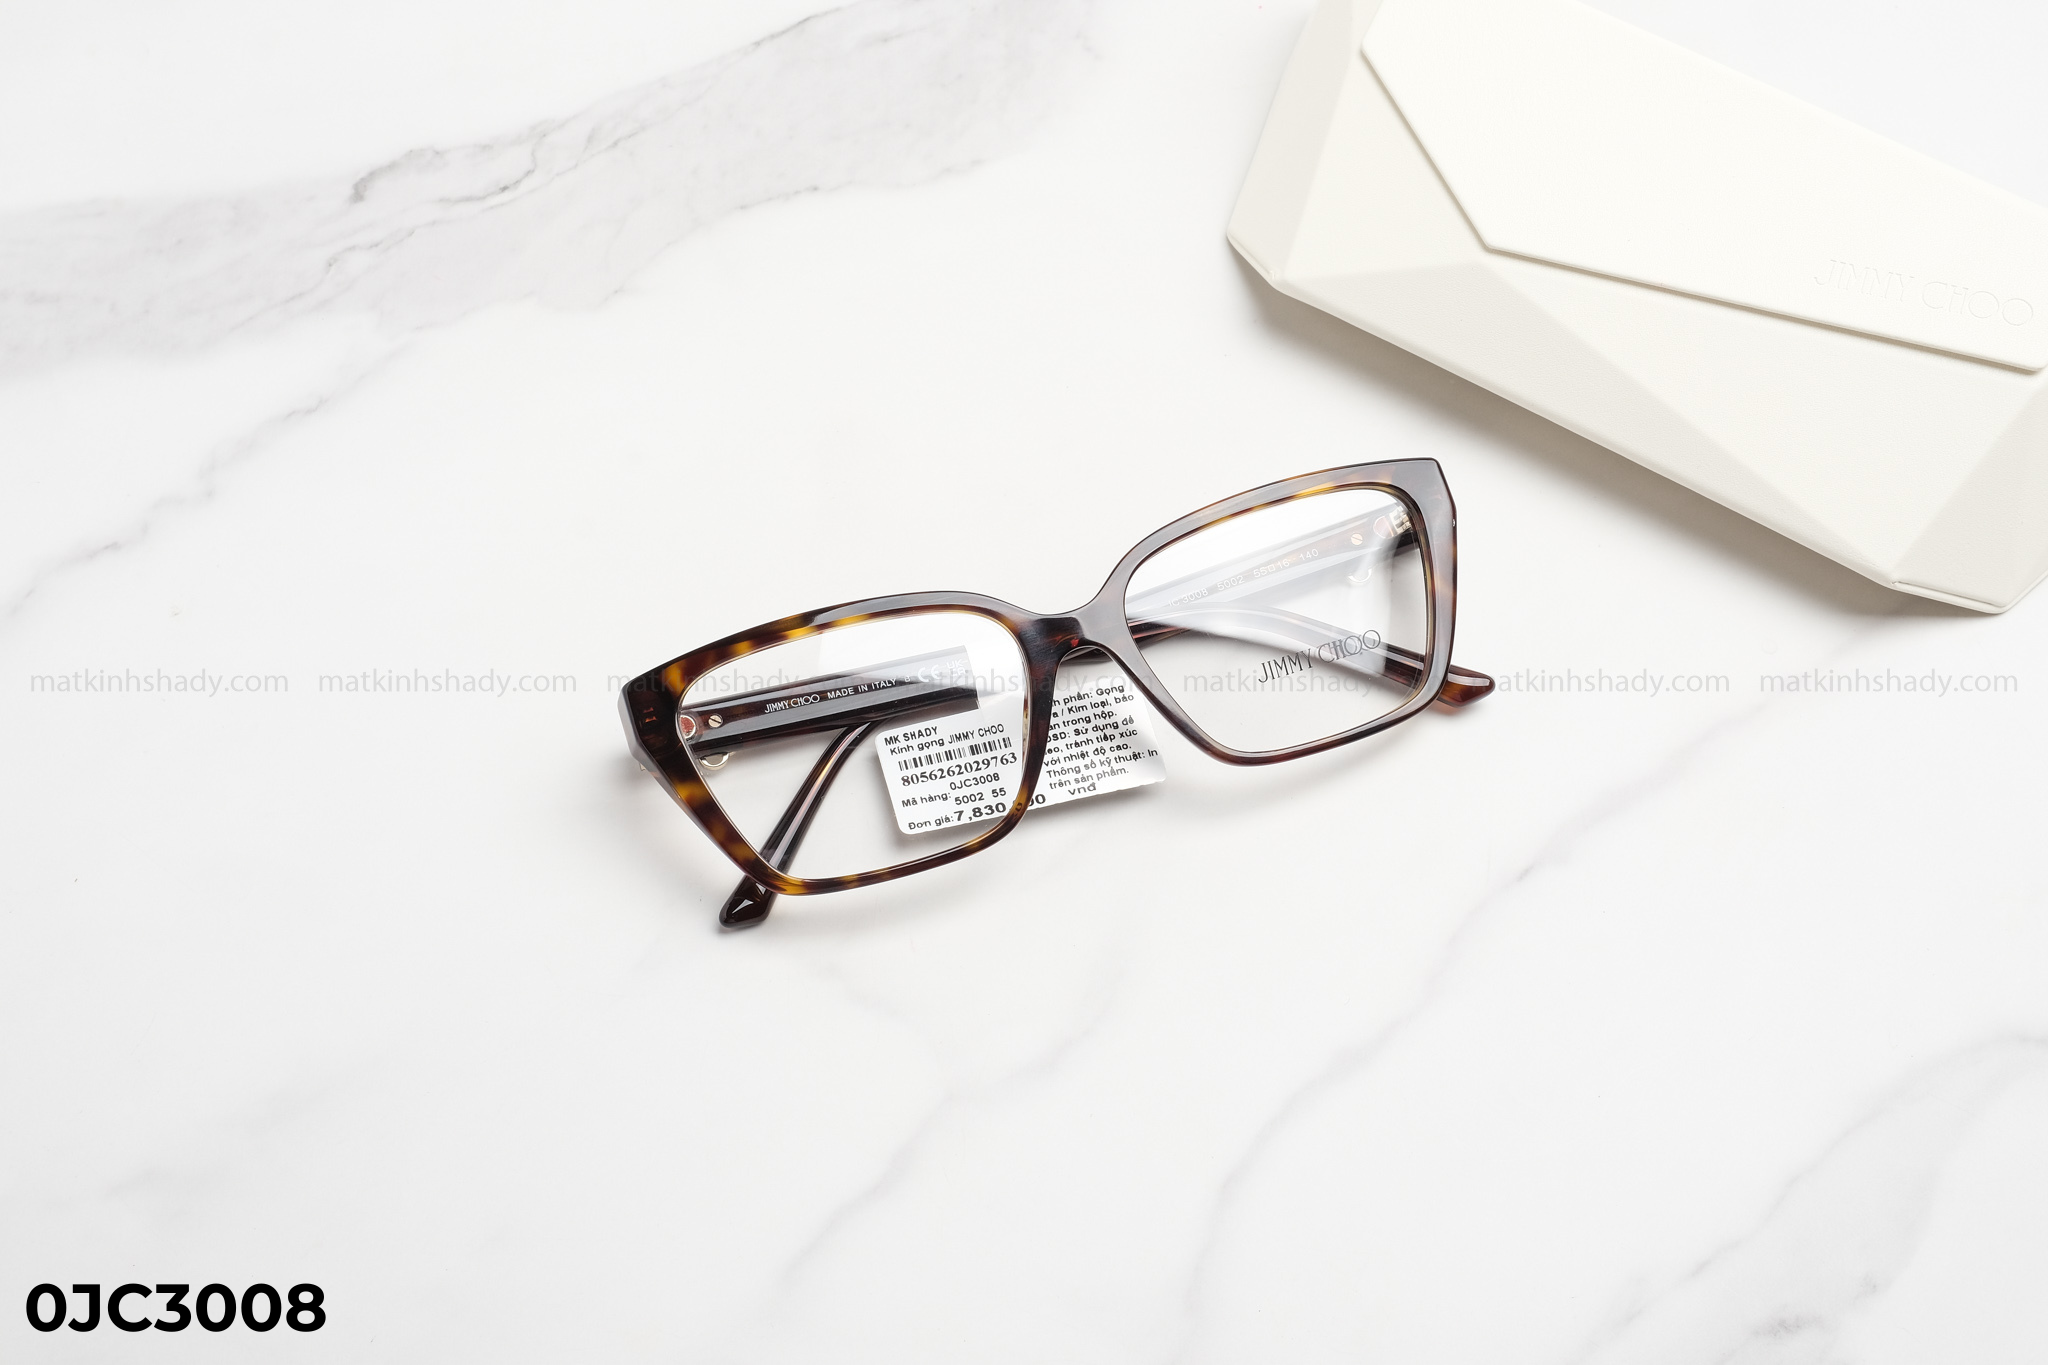  Jimmy Choo Eyewear - Glasses - 0JC3008 